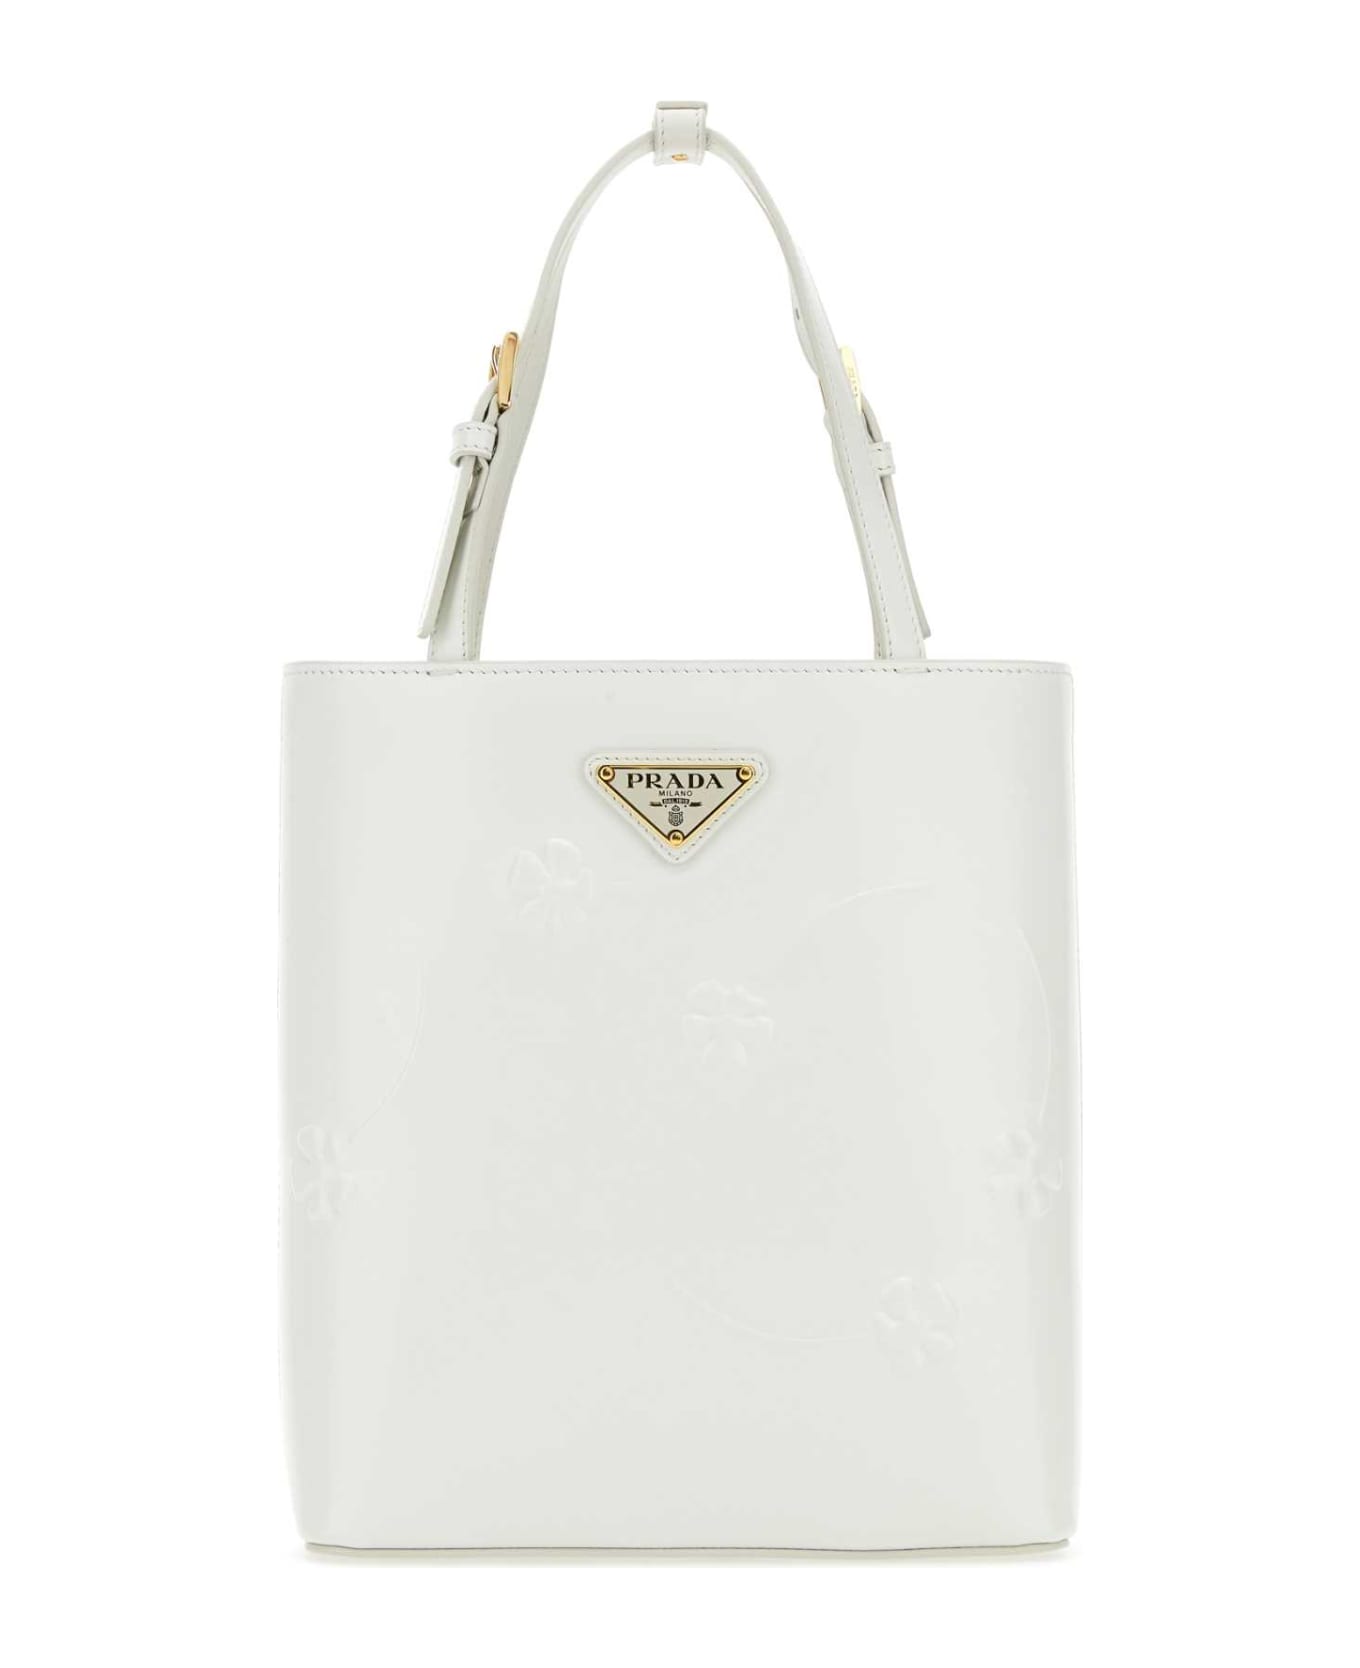 Prada White Leather Handbag - White